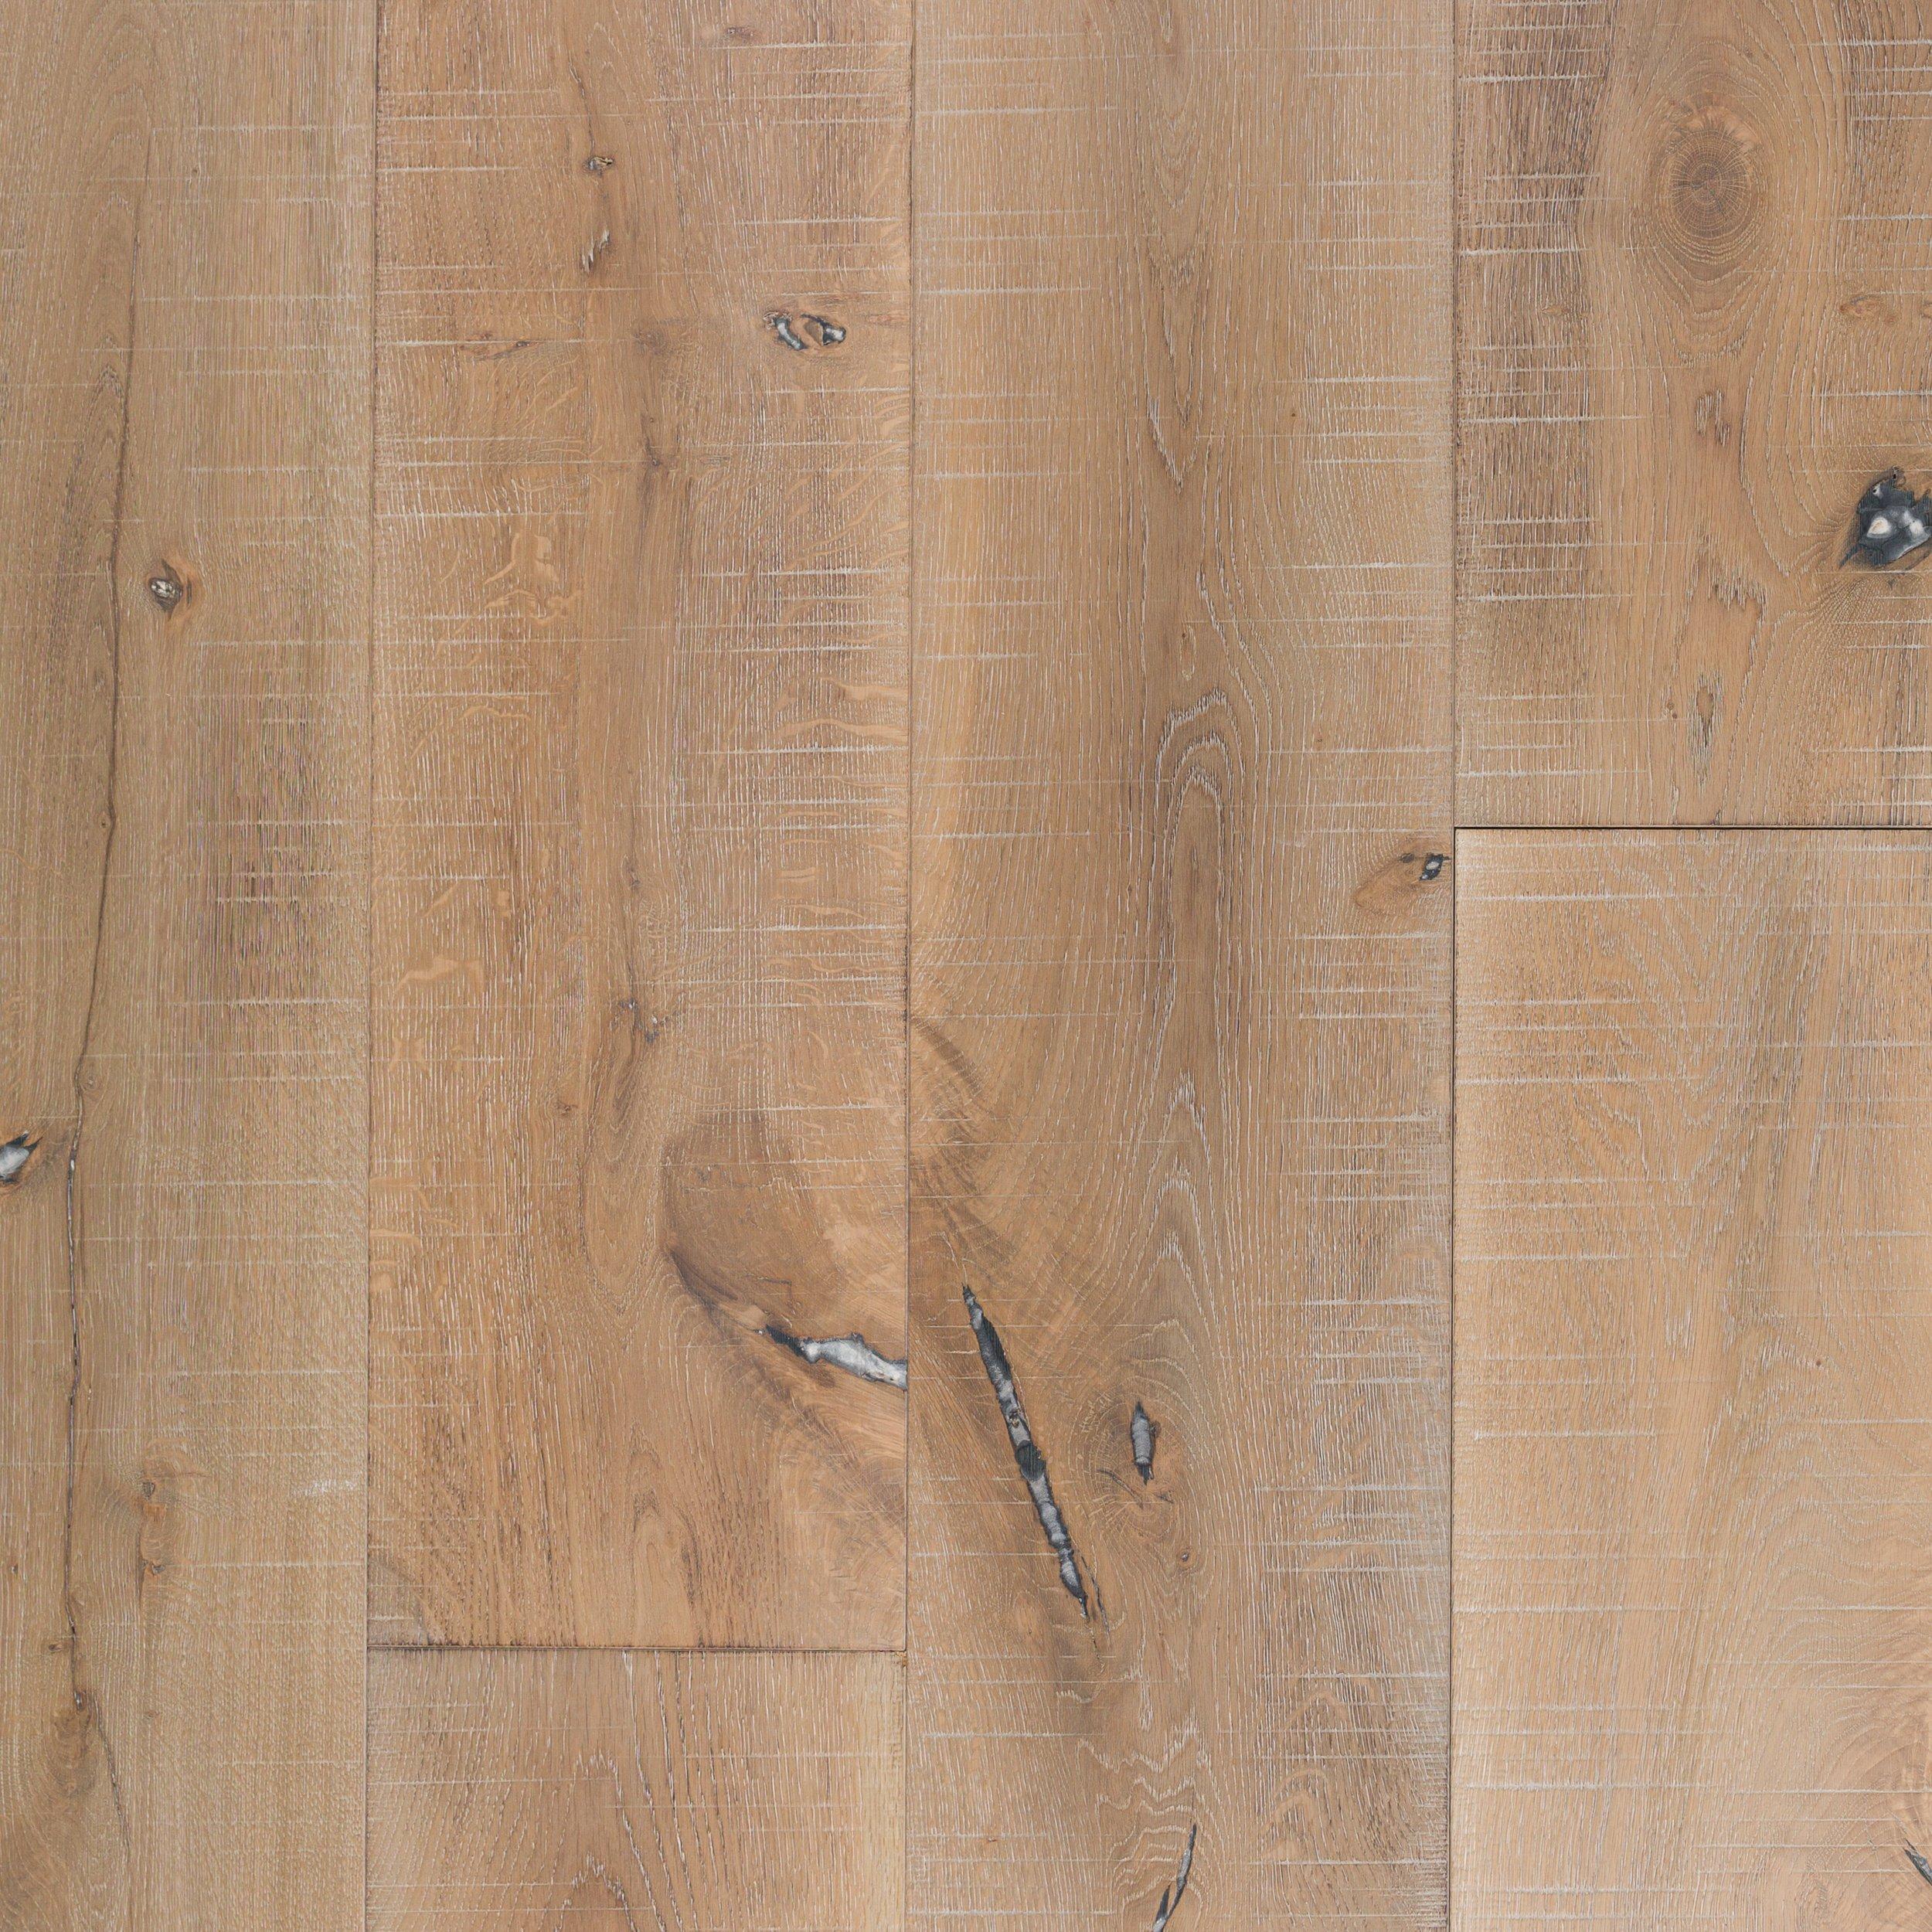 European Oak Rustic Distressed, European Hardwood Flooring